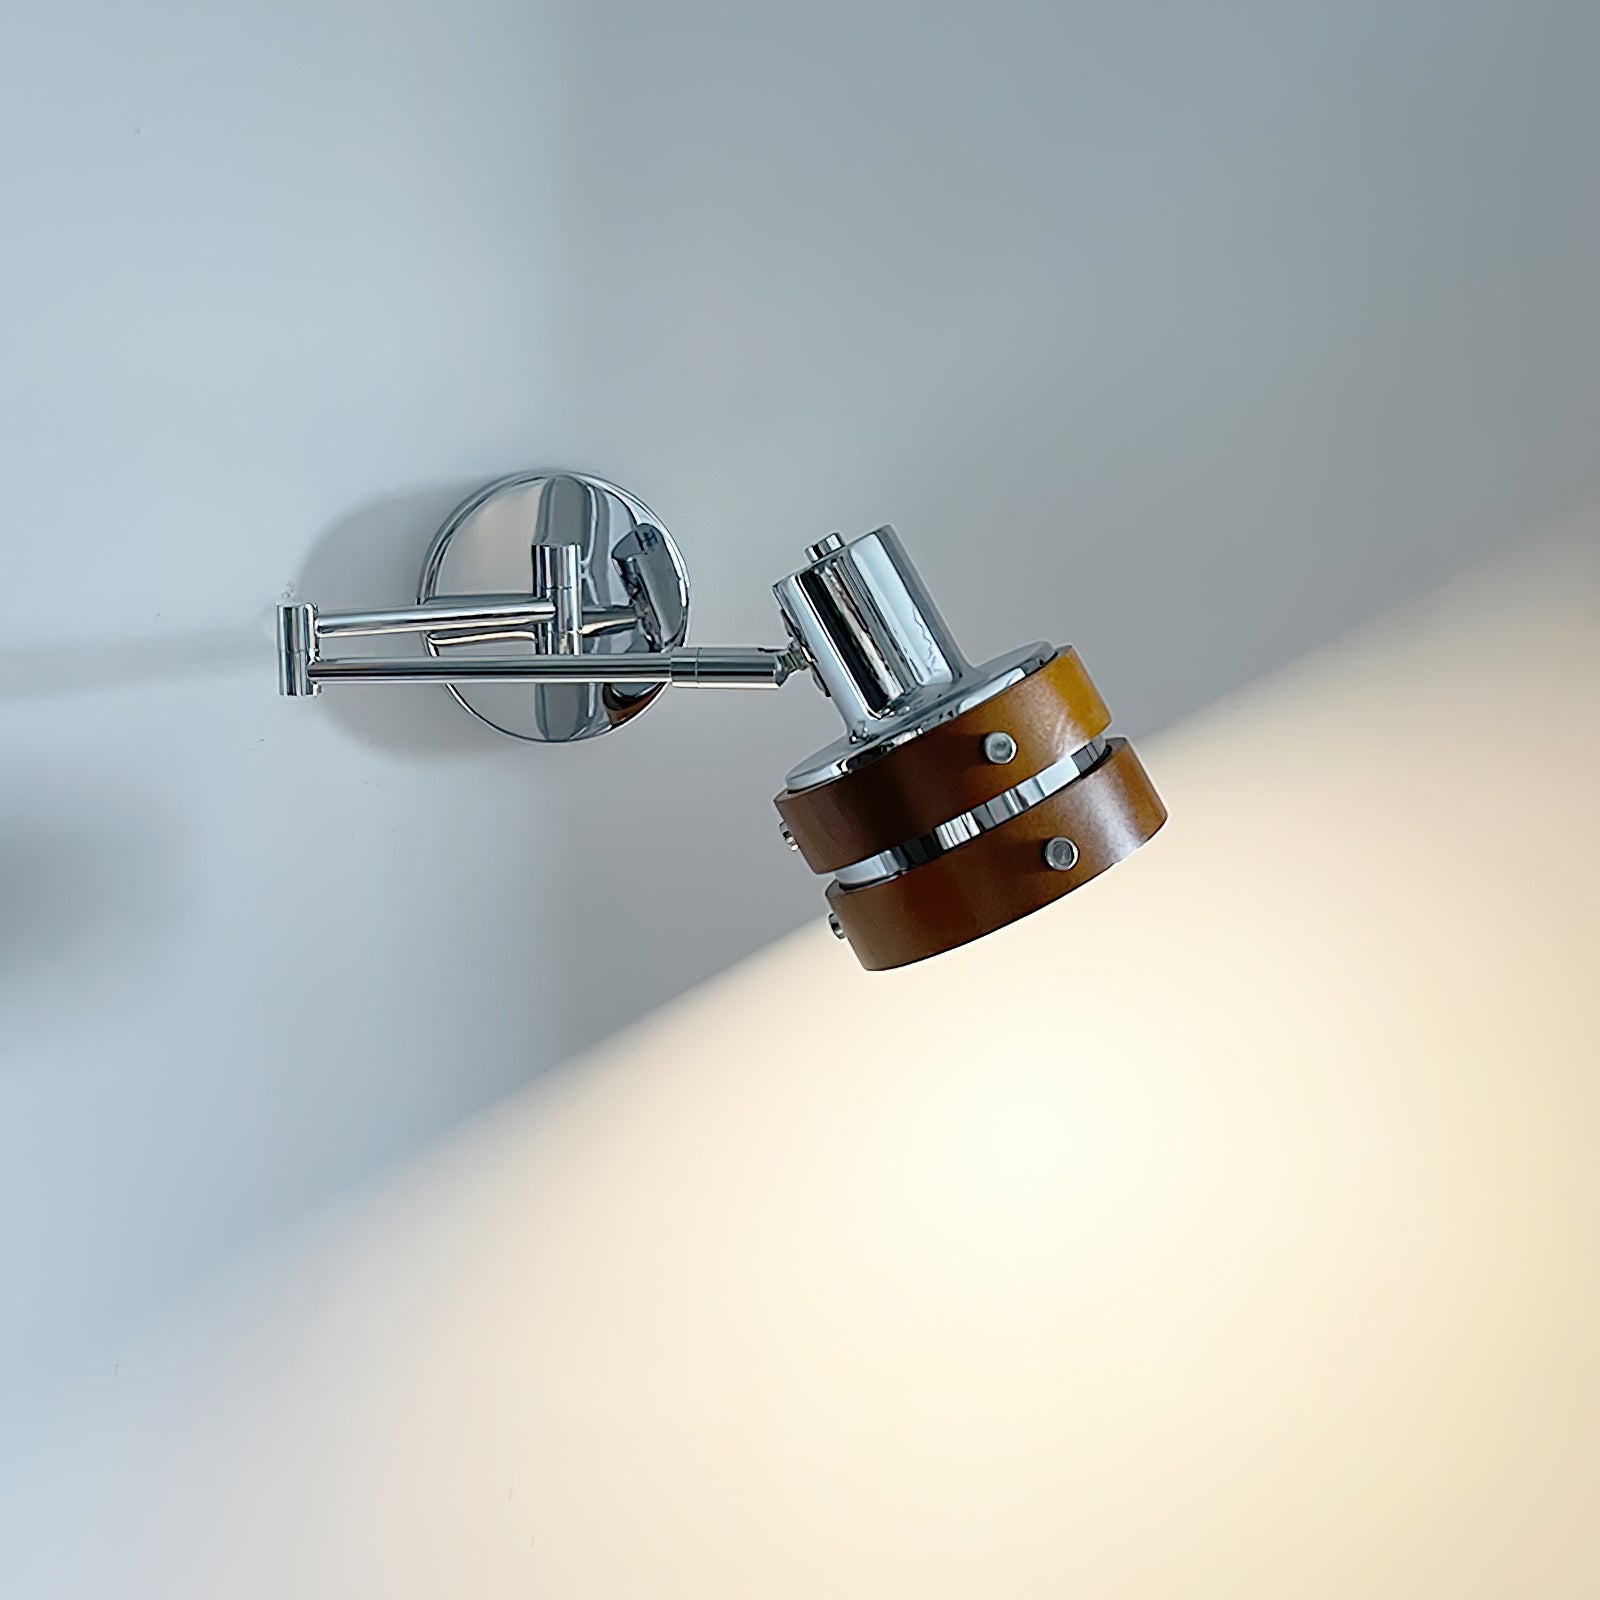 Karry Adjustable Wall Lamp